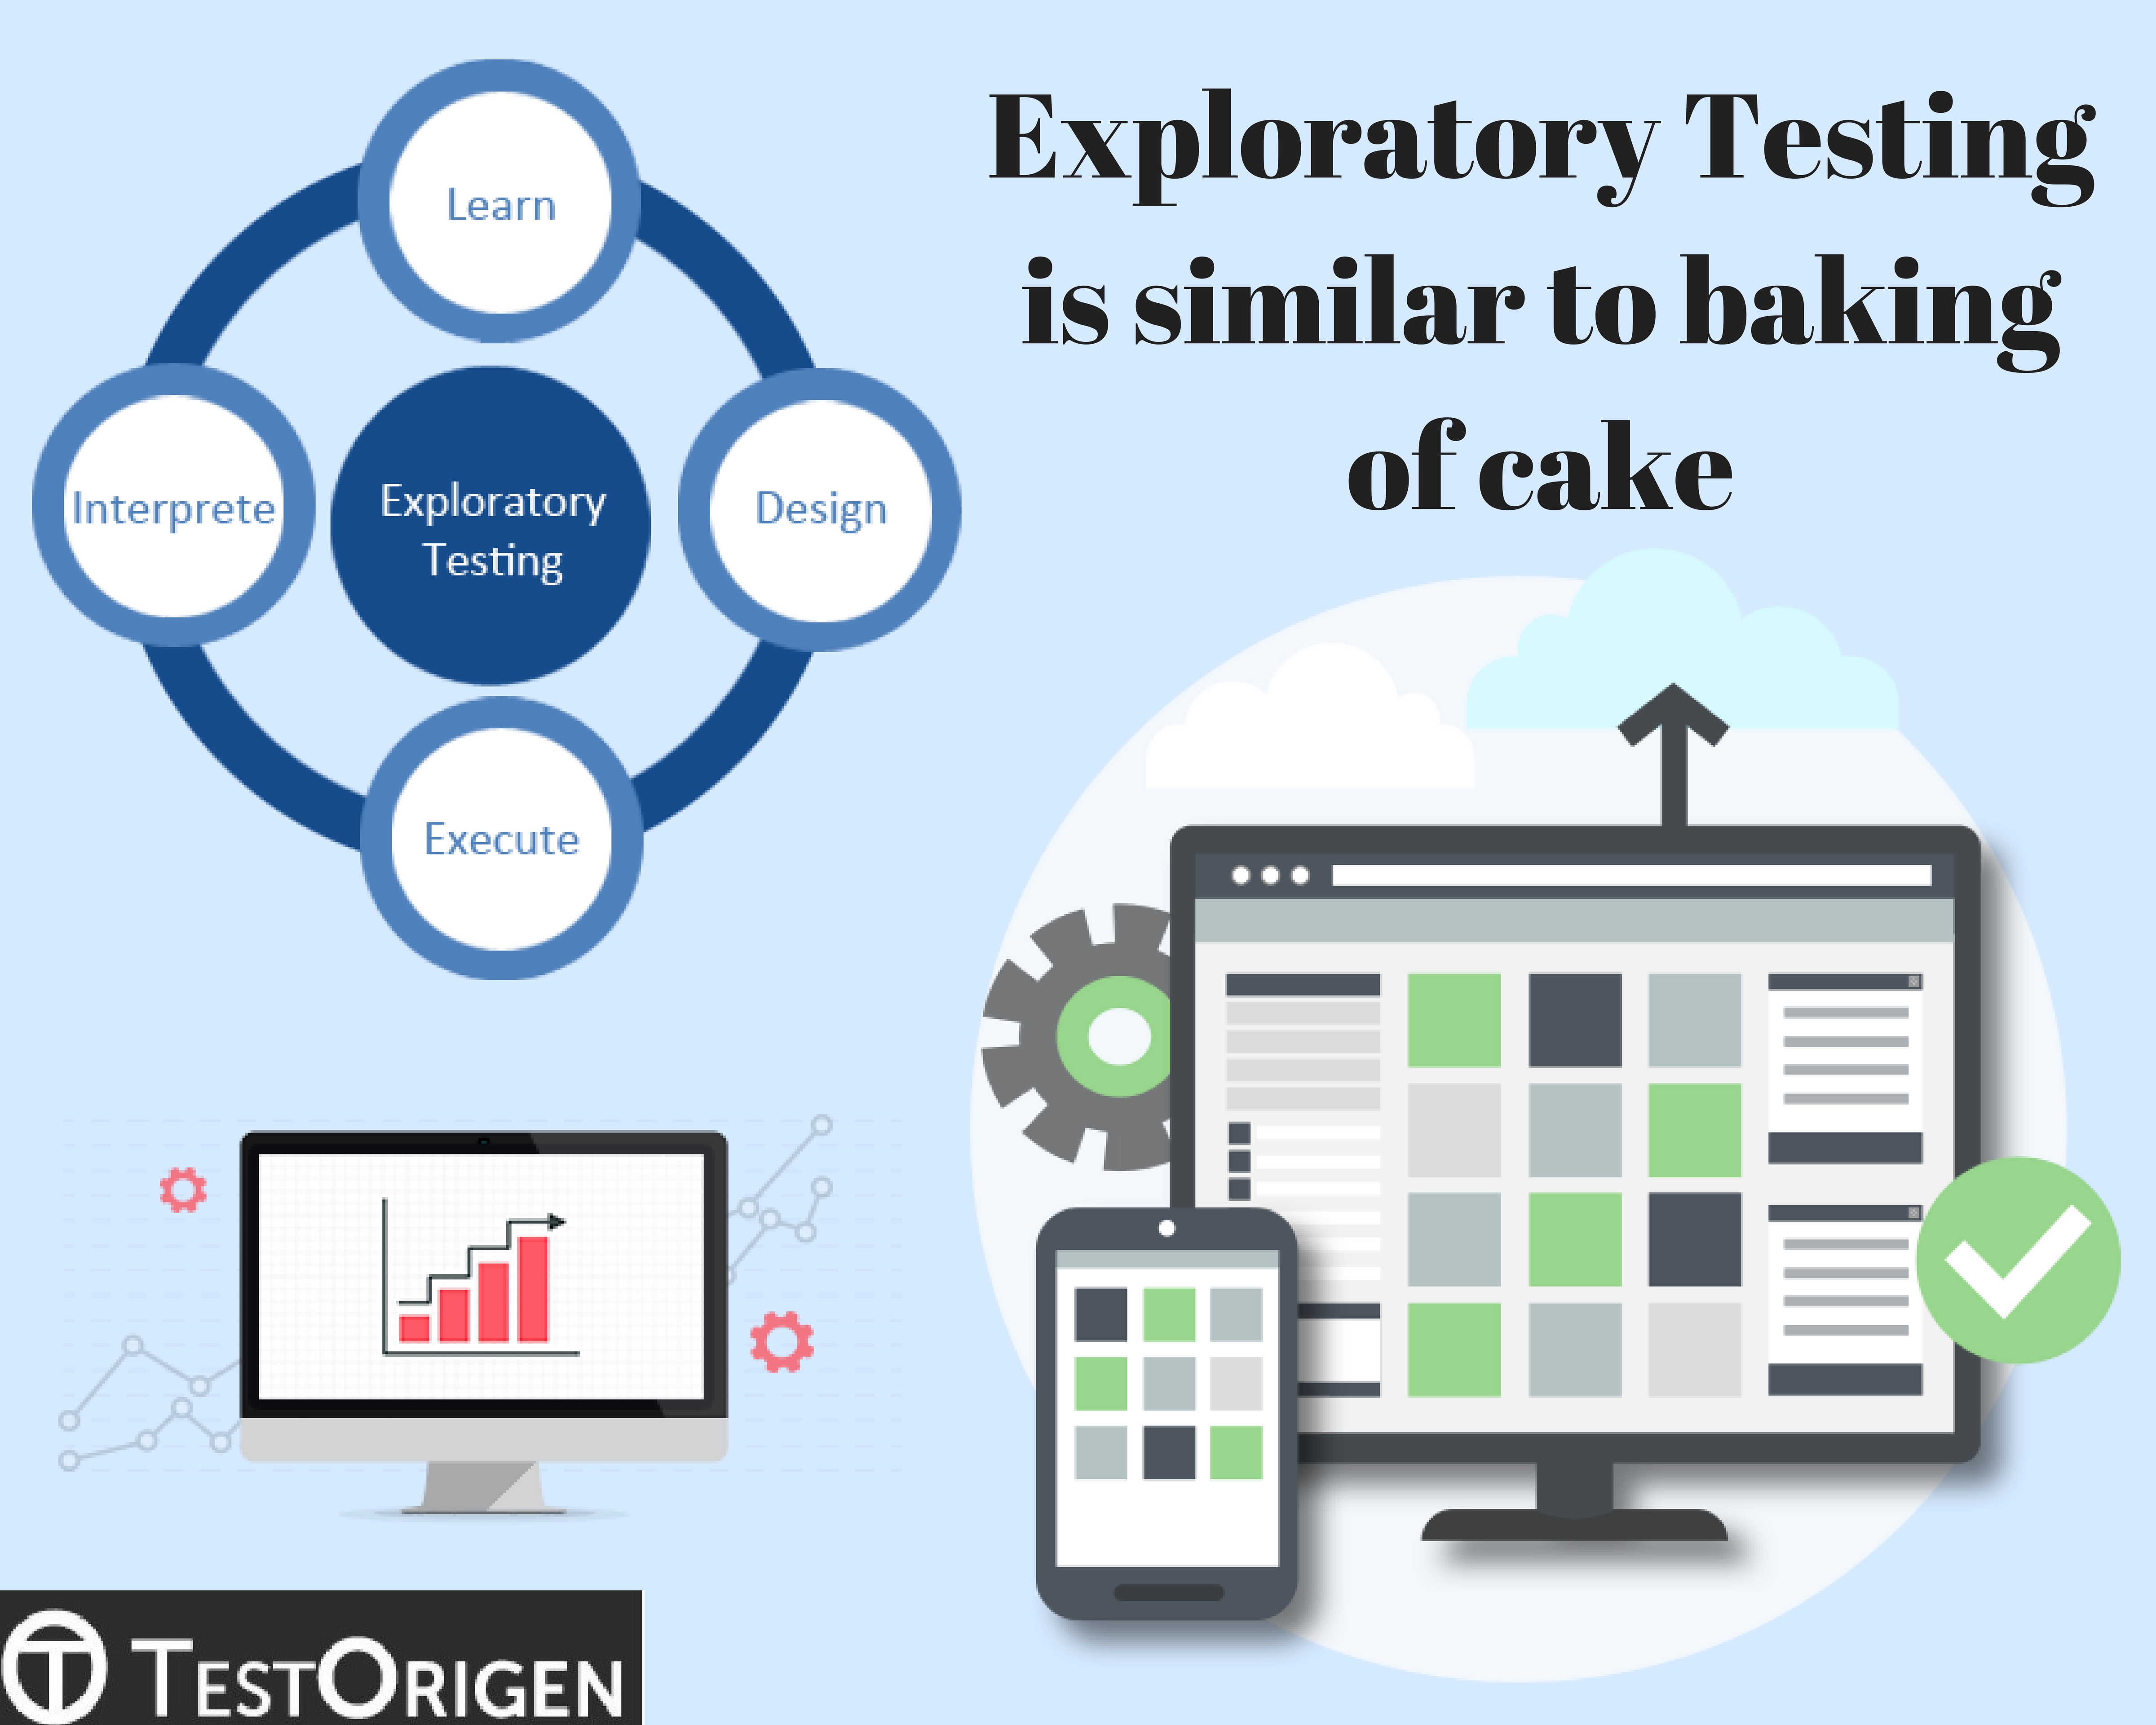 Exploratory Testing is similar to baking of cake